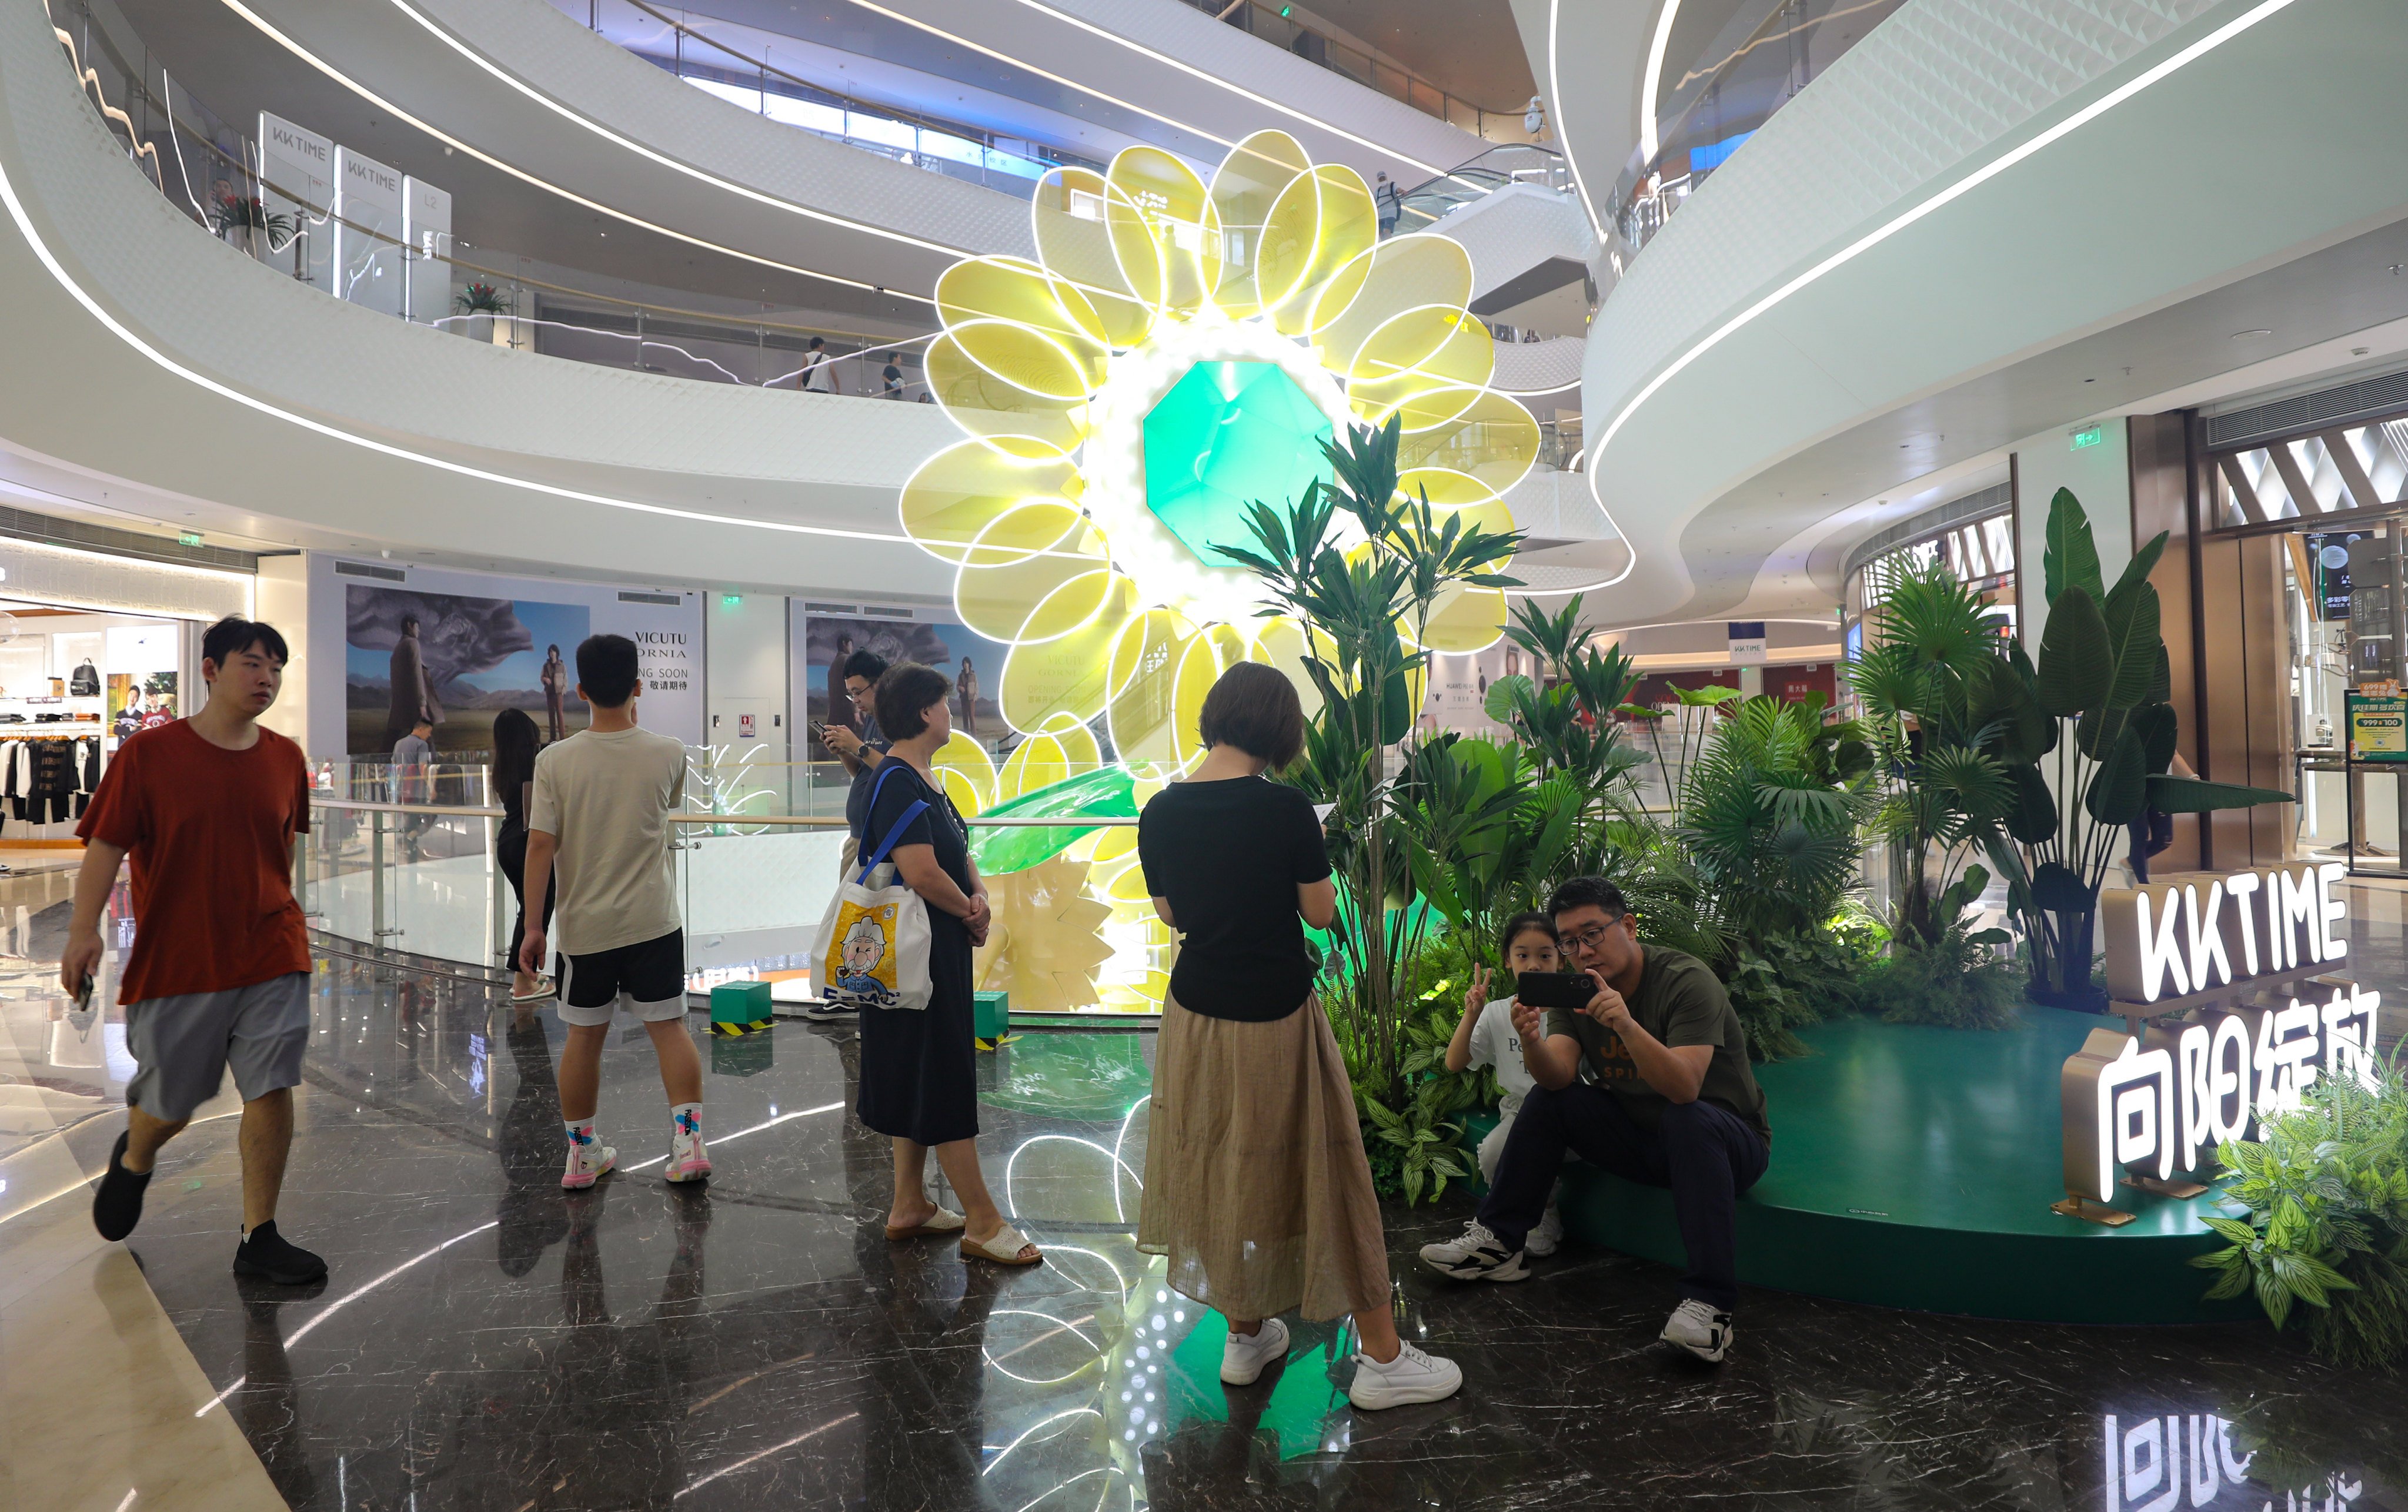 Shoppers at KK Time mall in Shenzhen. Photo: Xiaomei Chen